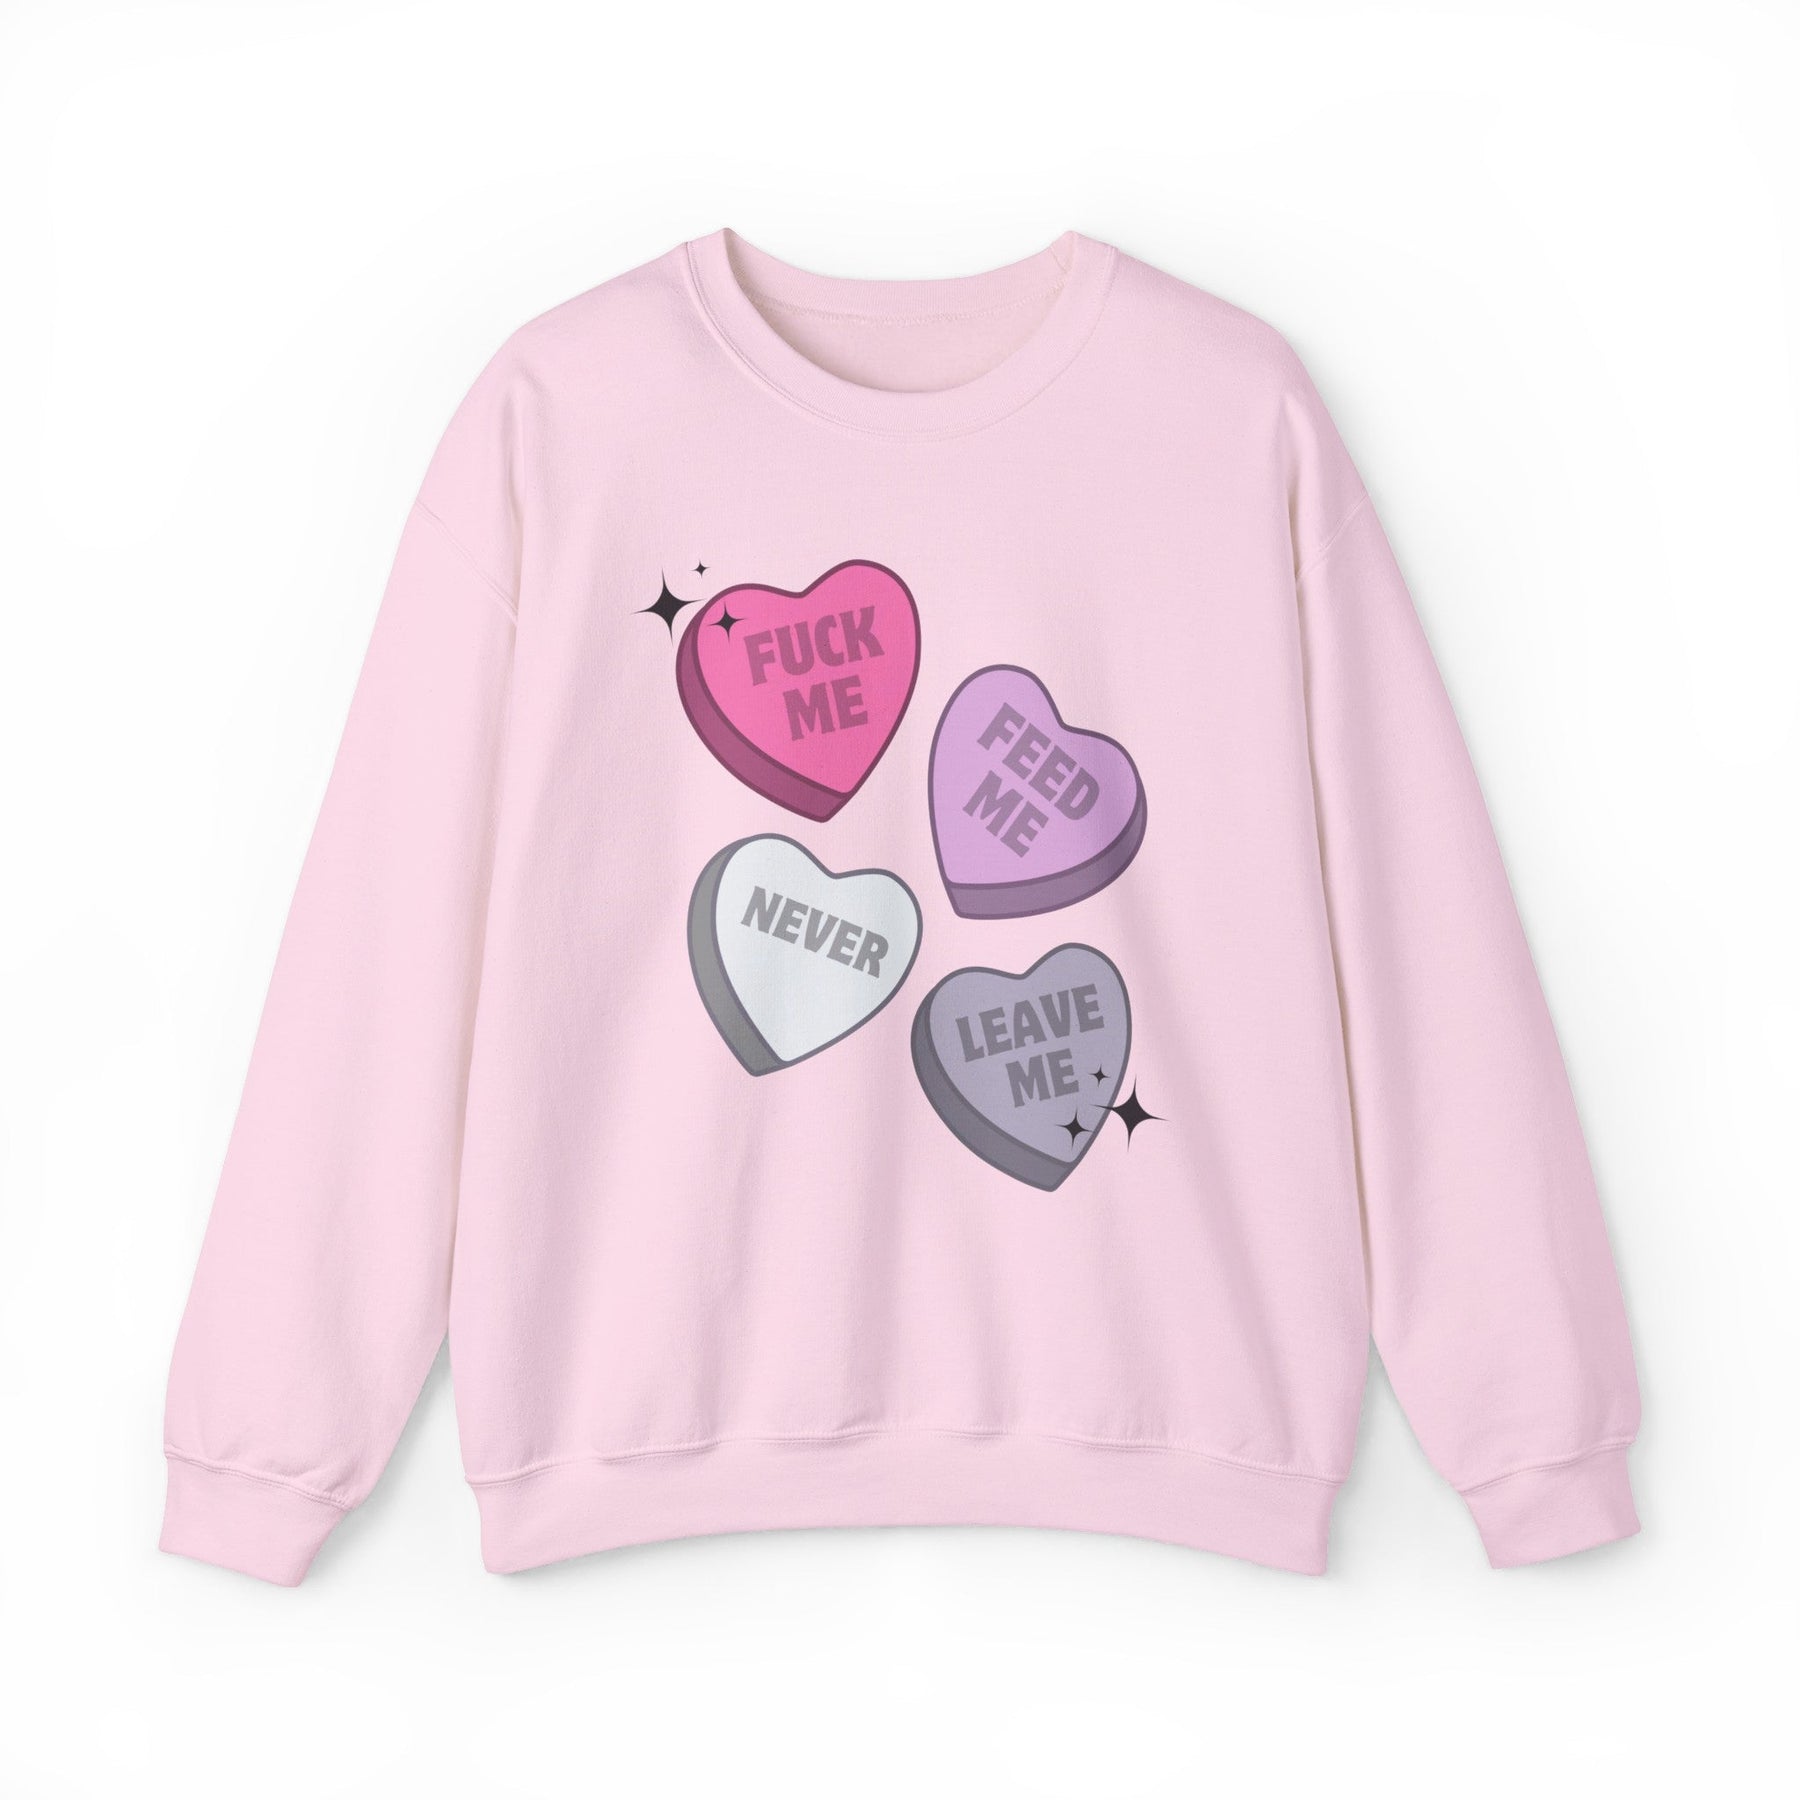 'F*ck Me, Feed Me, Never Leave Me' Candy Hearts Crewneck Sweatshirt - Goth Cloth Co.Sweatshirt15795548110692124295